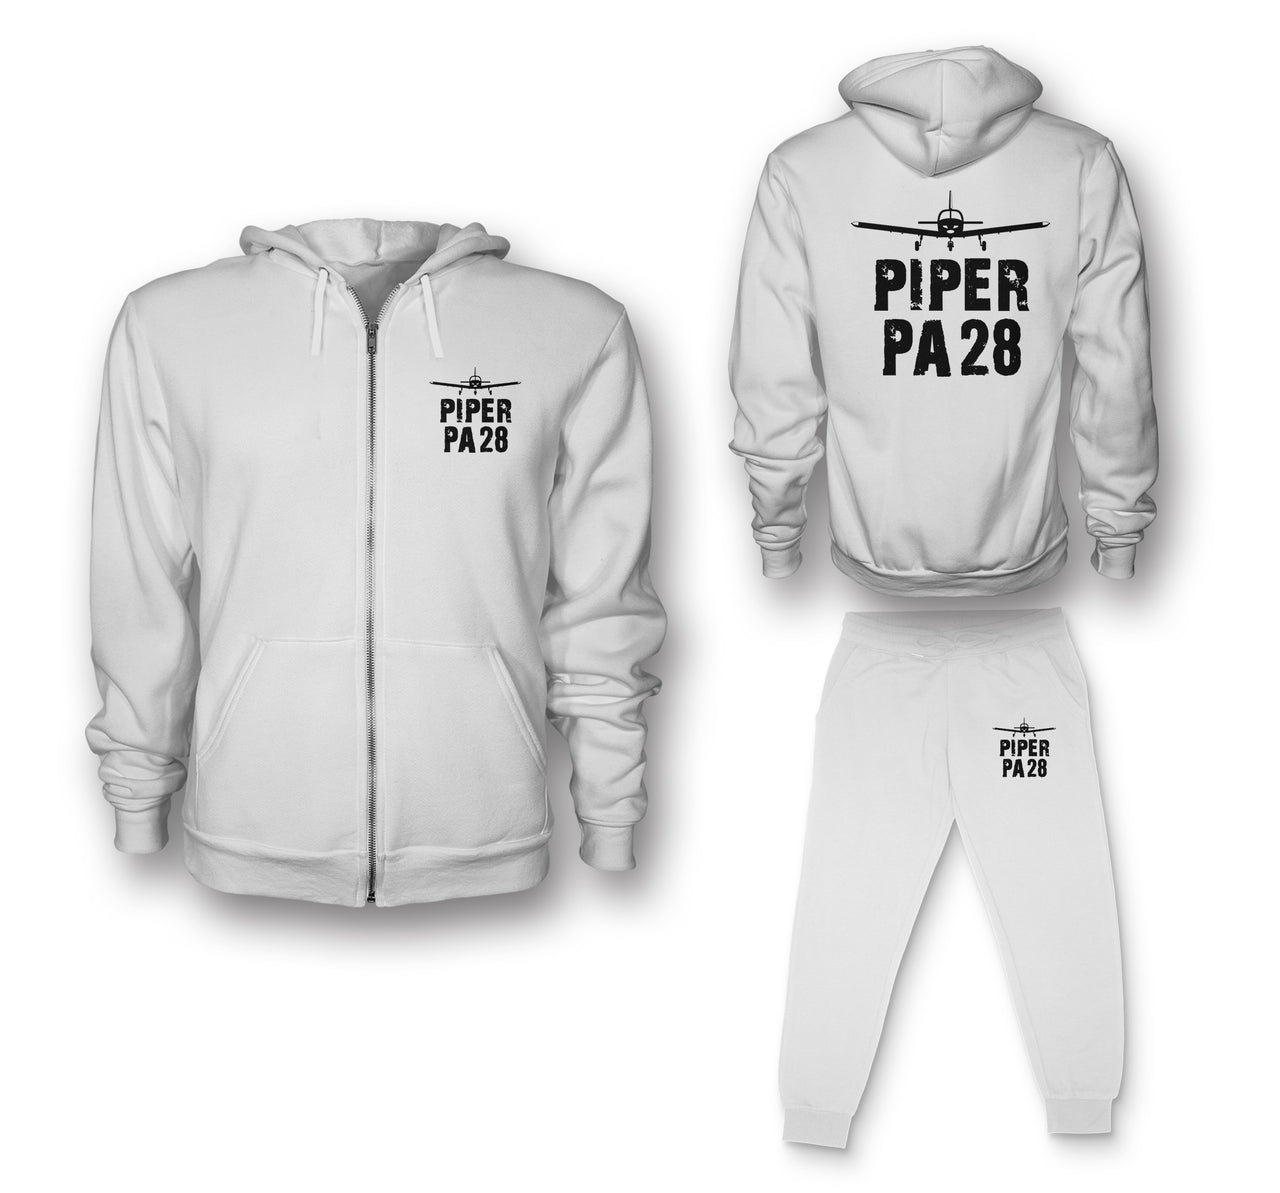 Piper PA28 & Plane Designed Zipped Hoodies & Sweatpants Set